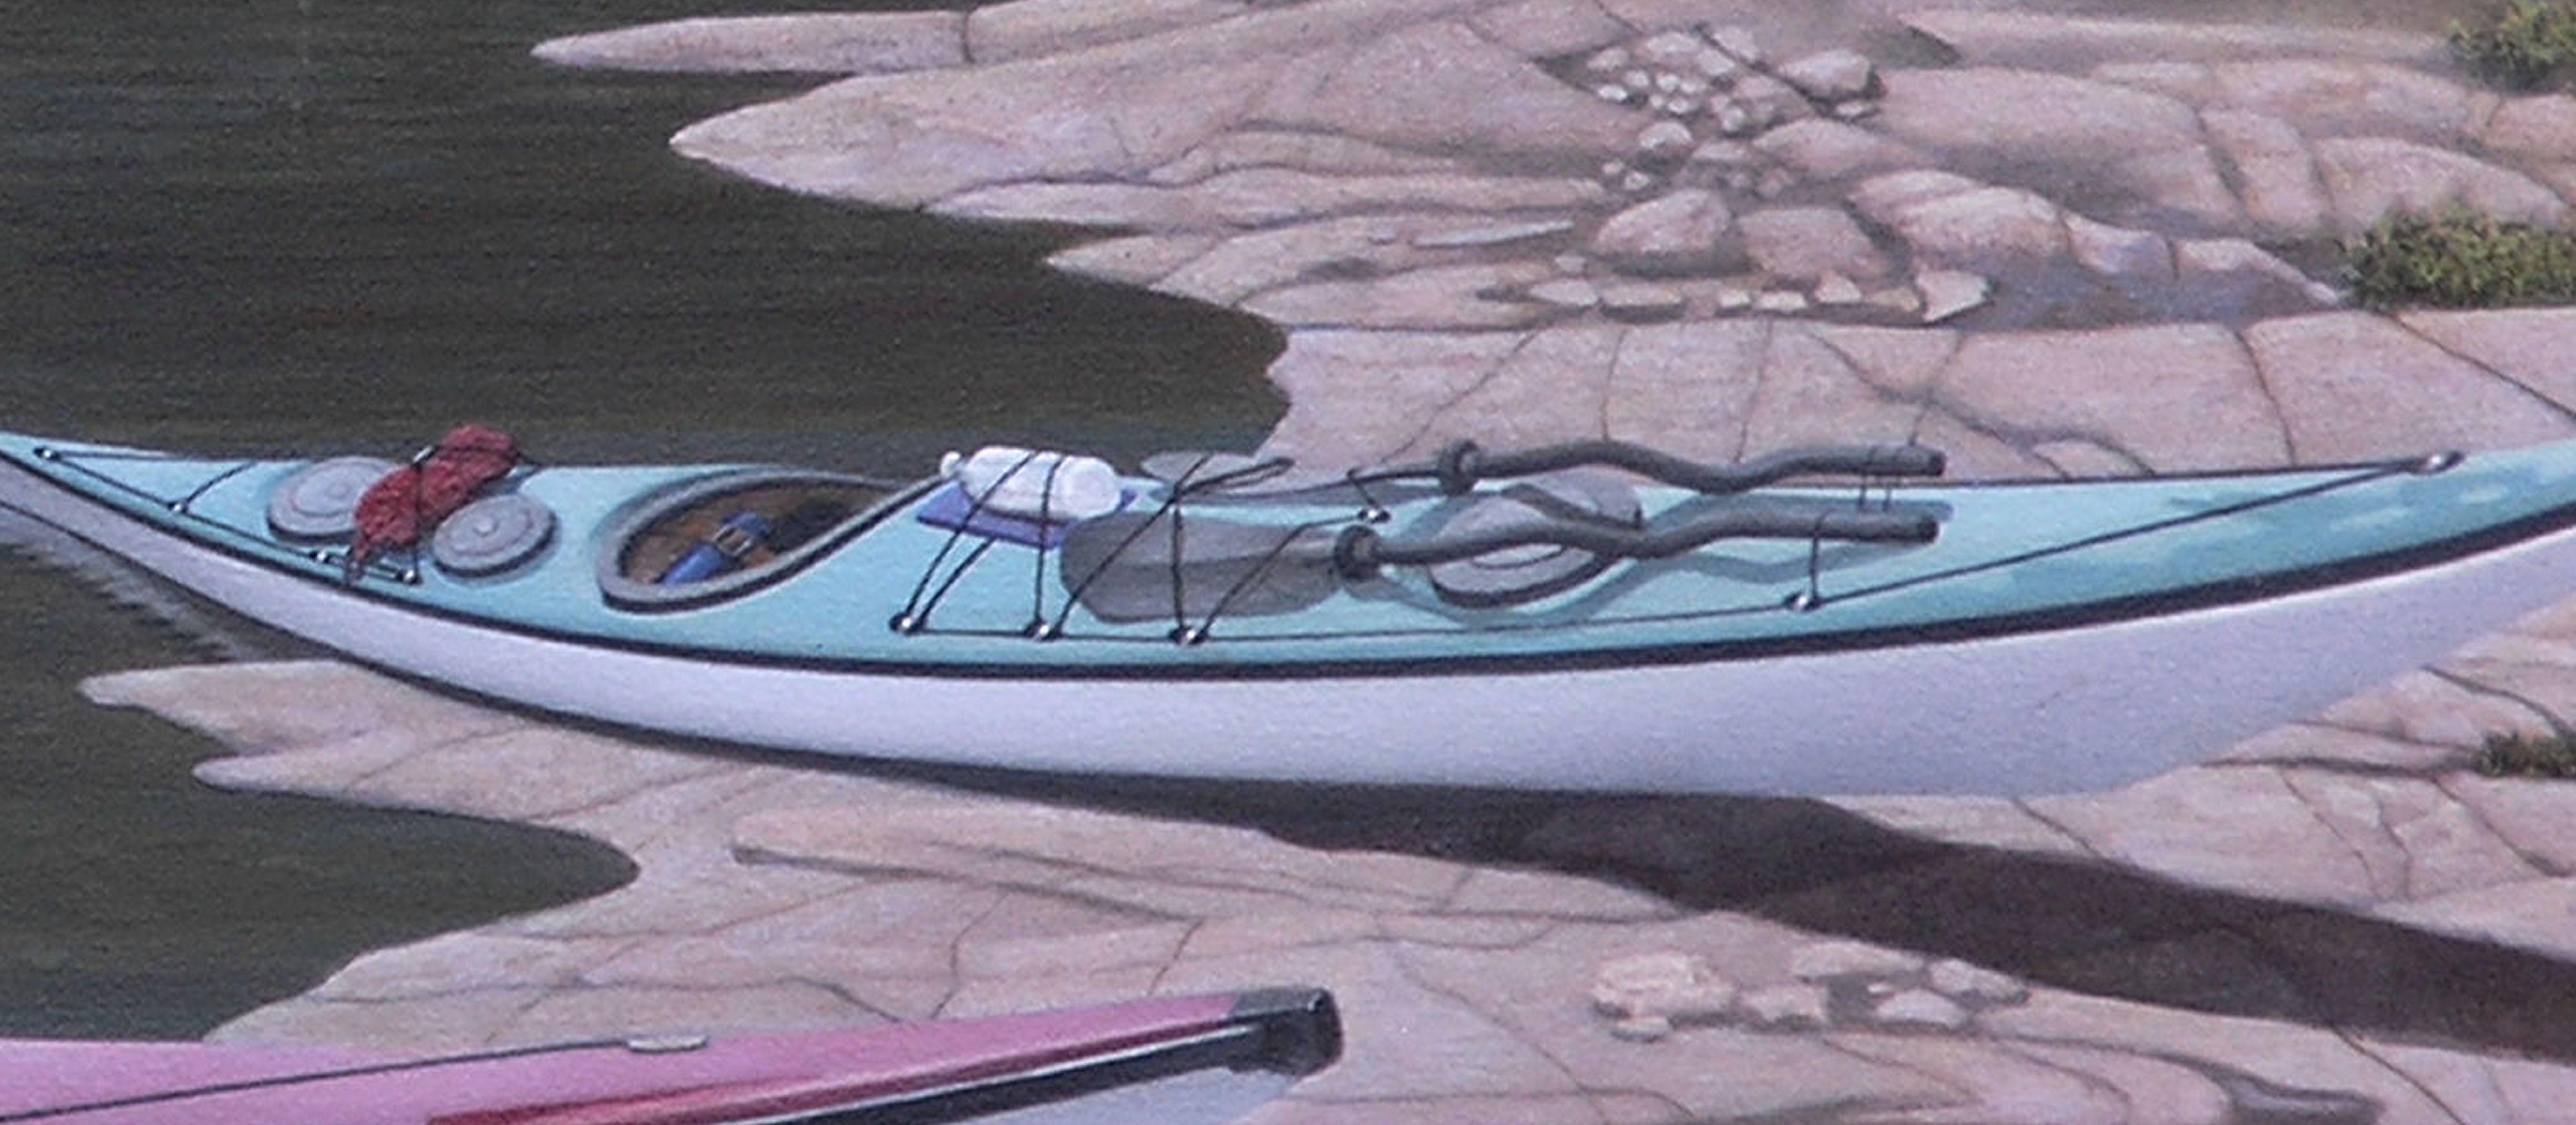 kayak paintings on canvas